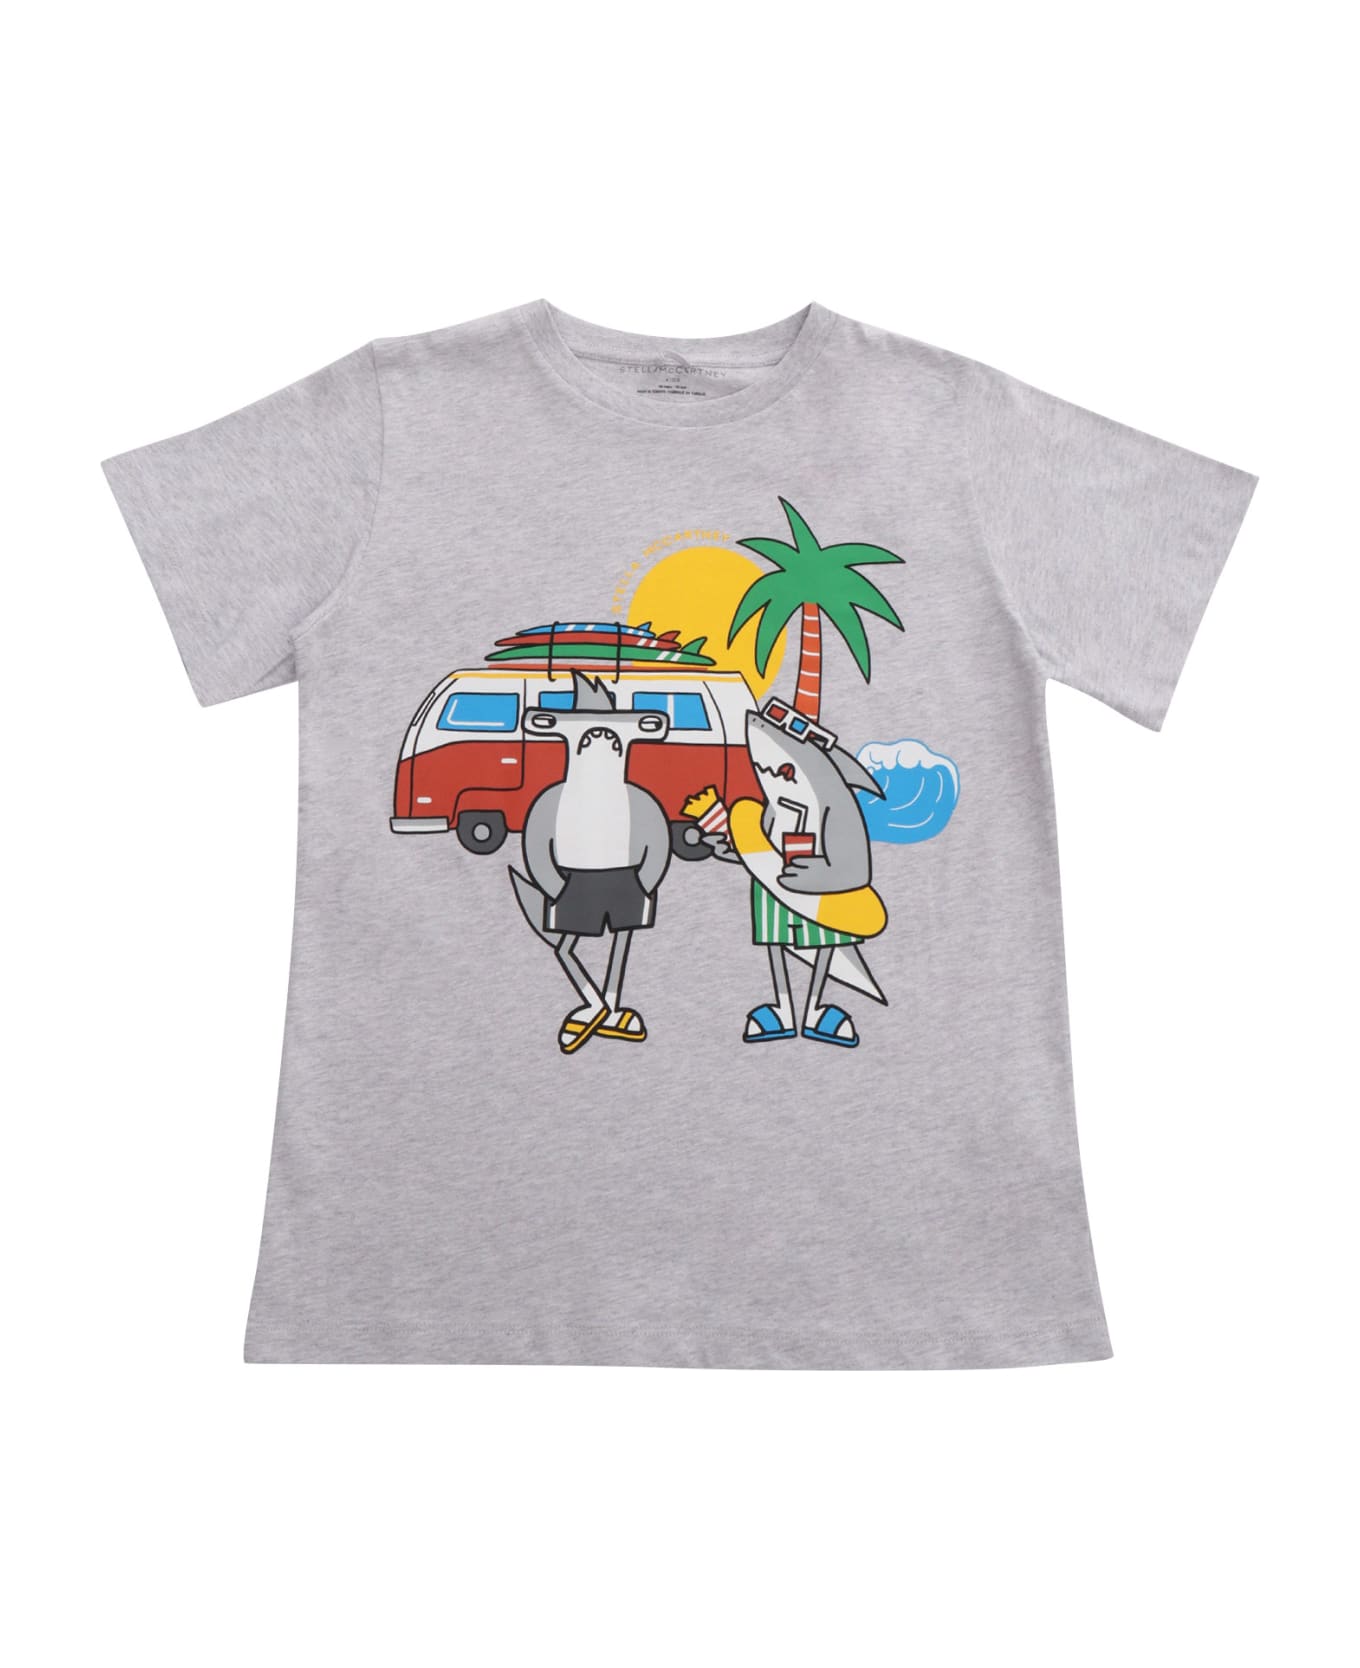 Stella McCartney Kids Gray T-shirt With Prints - GREY